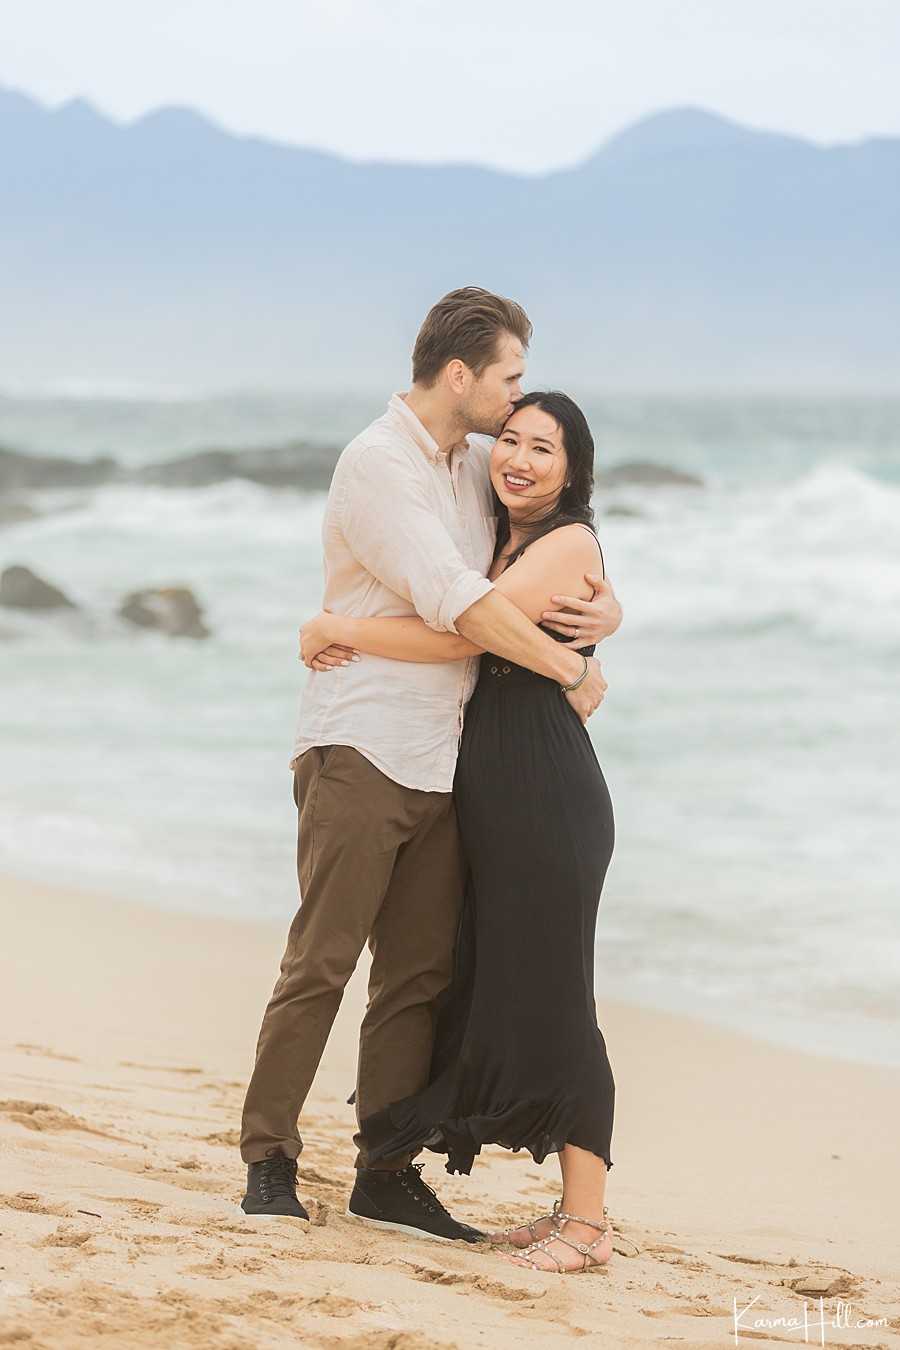 Maui couples photographer